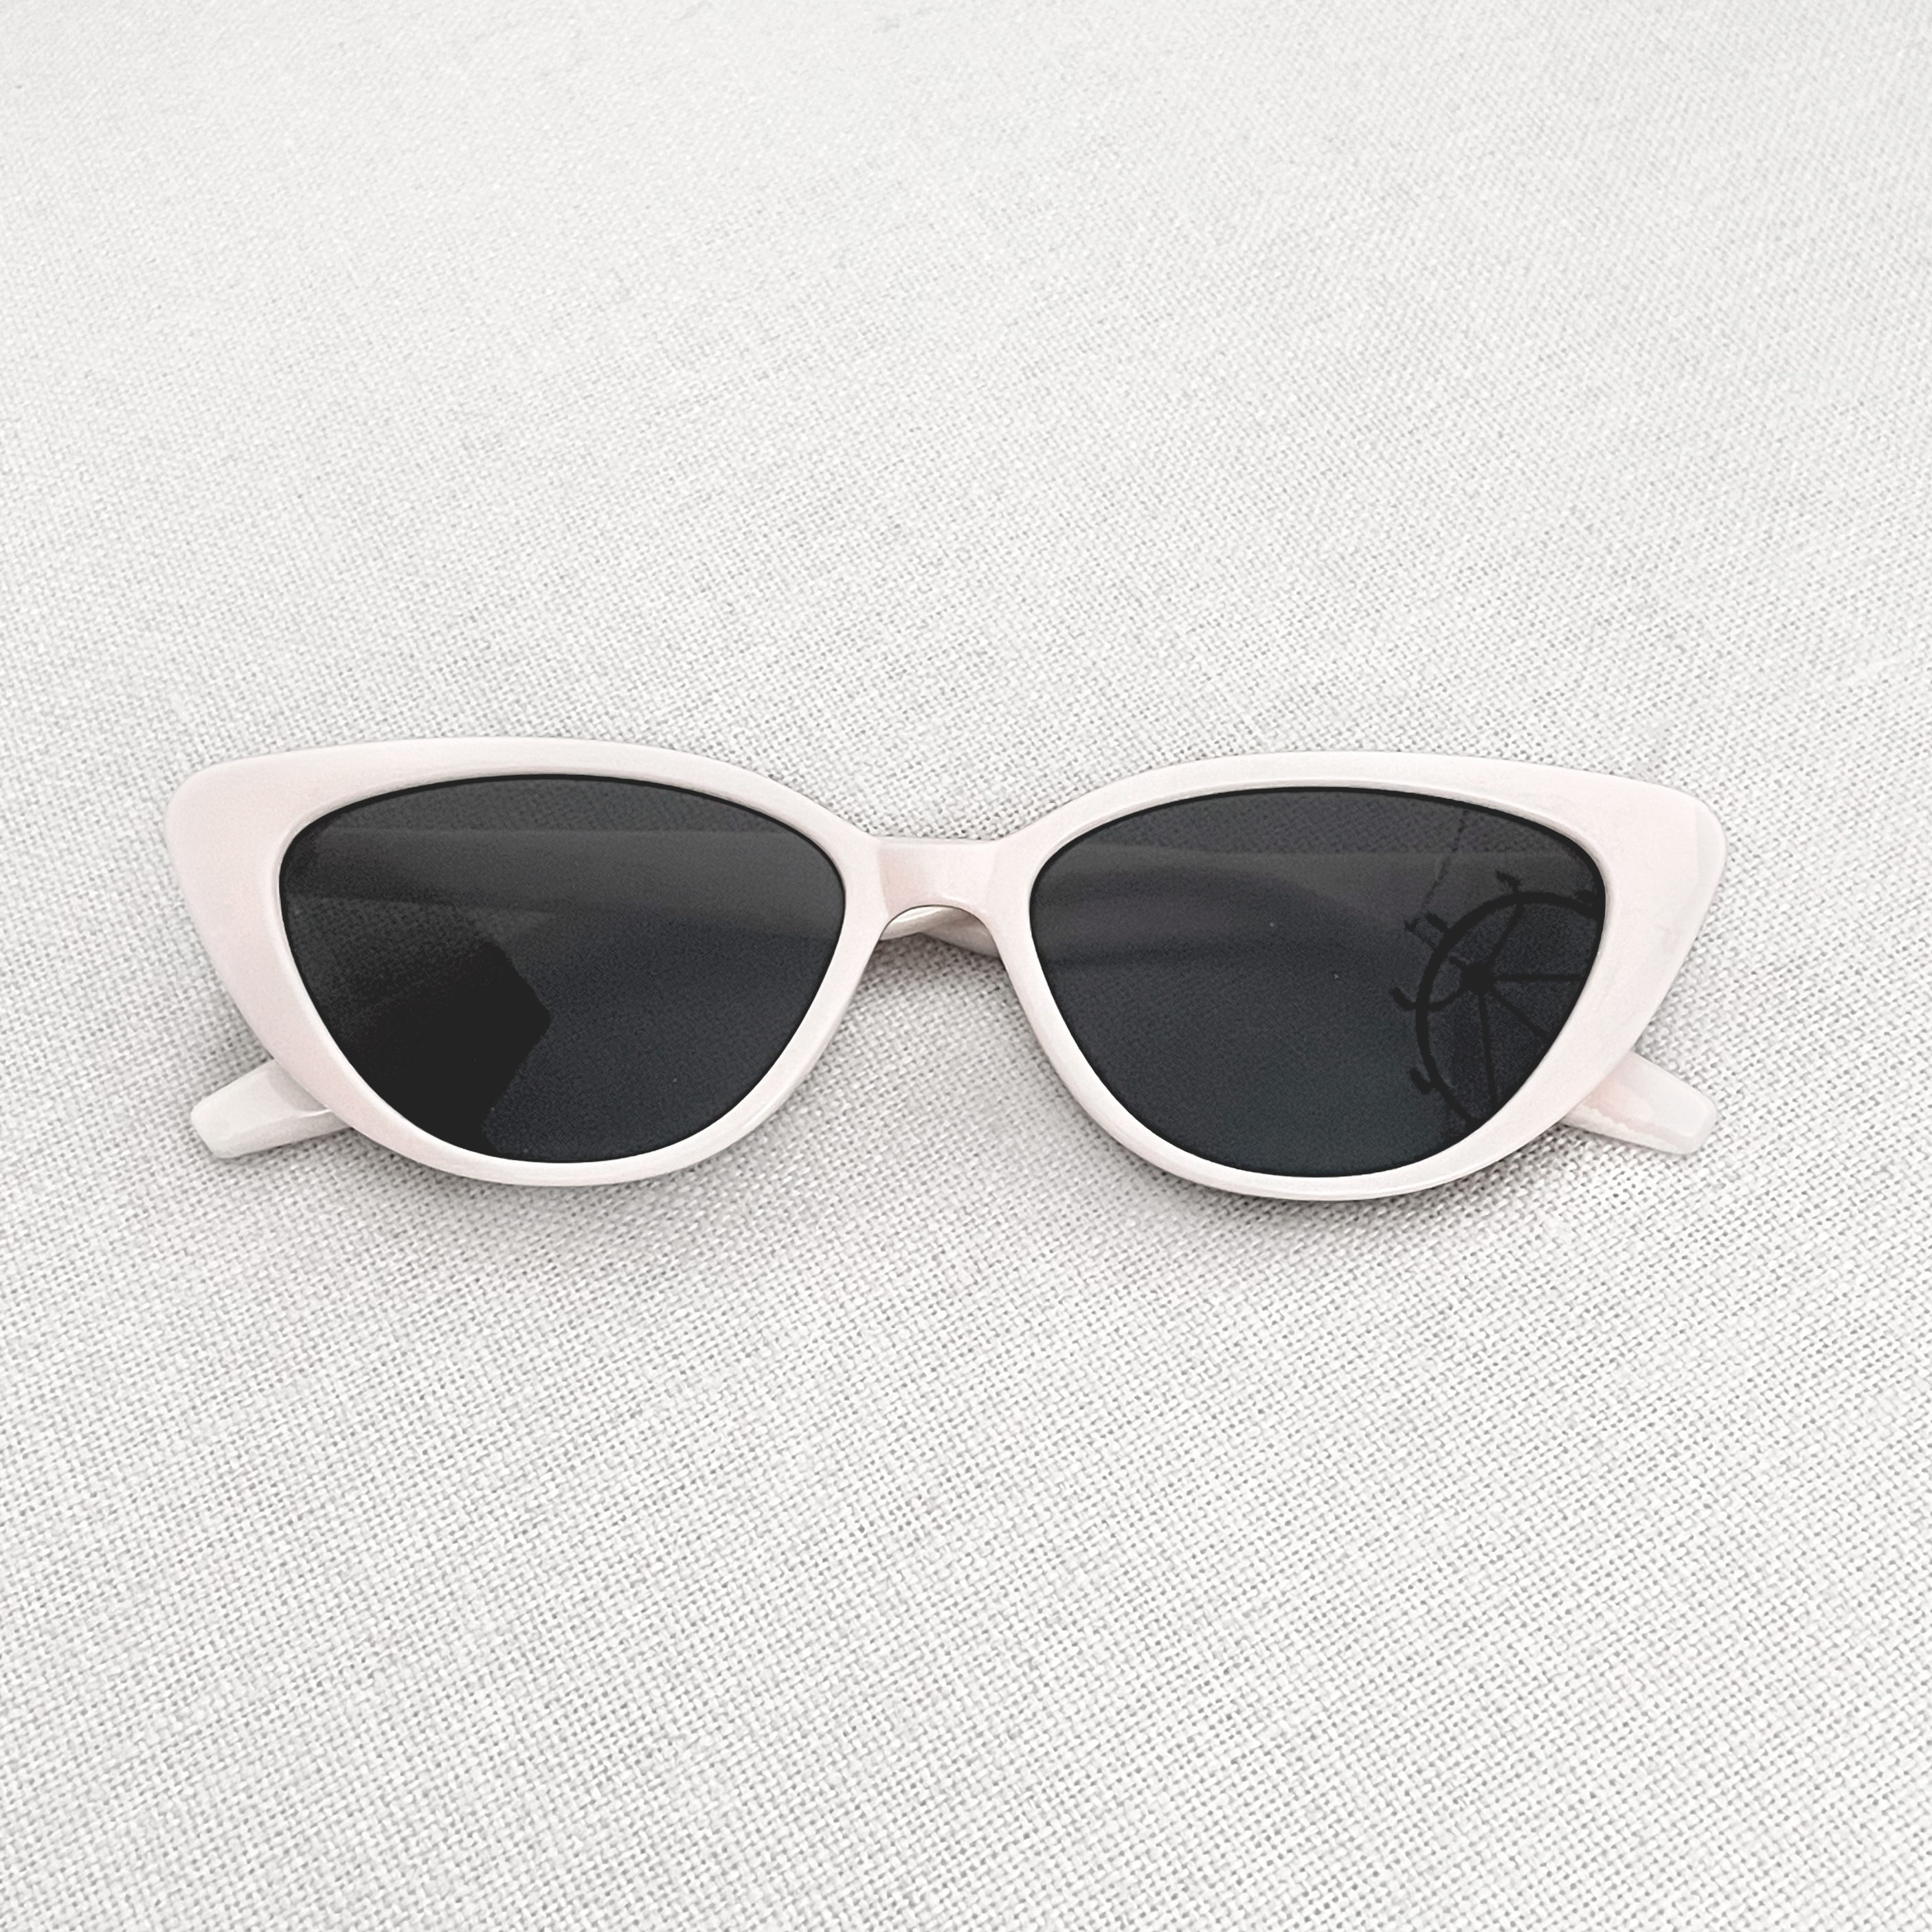 Sunglasses - Adult Cateye Cream